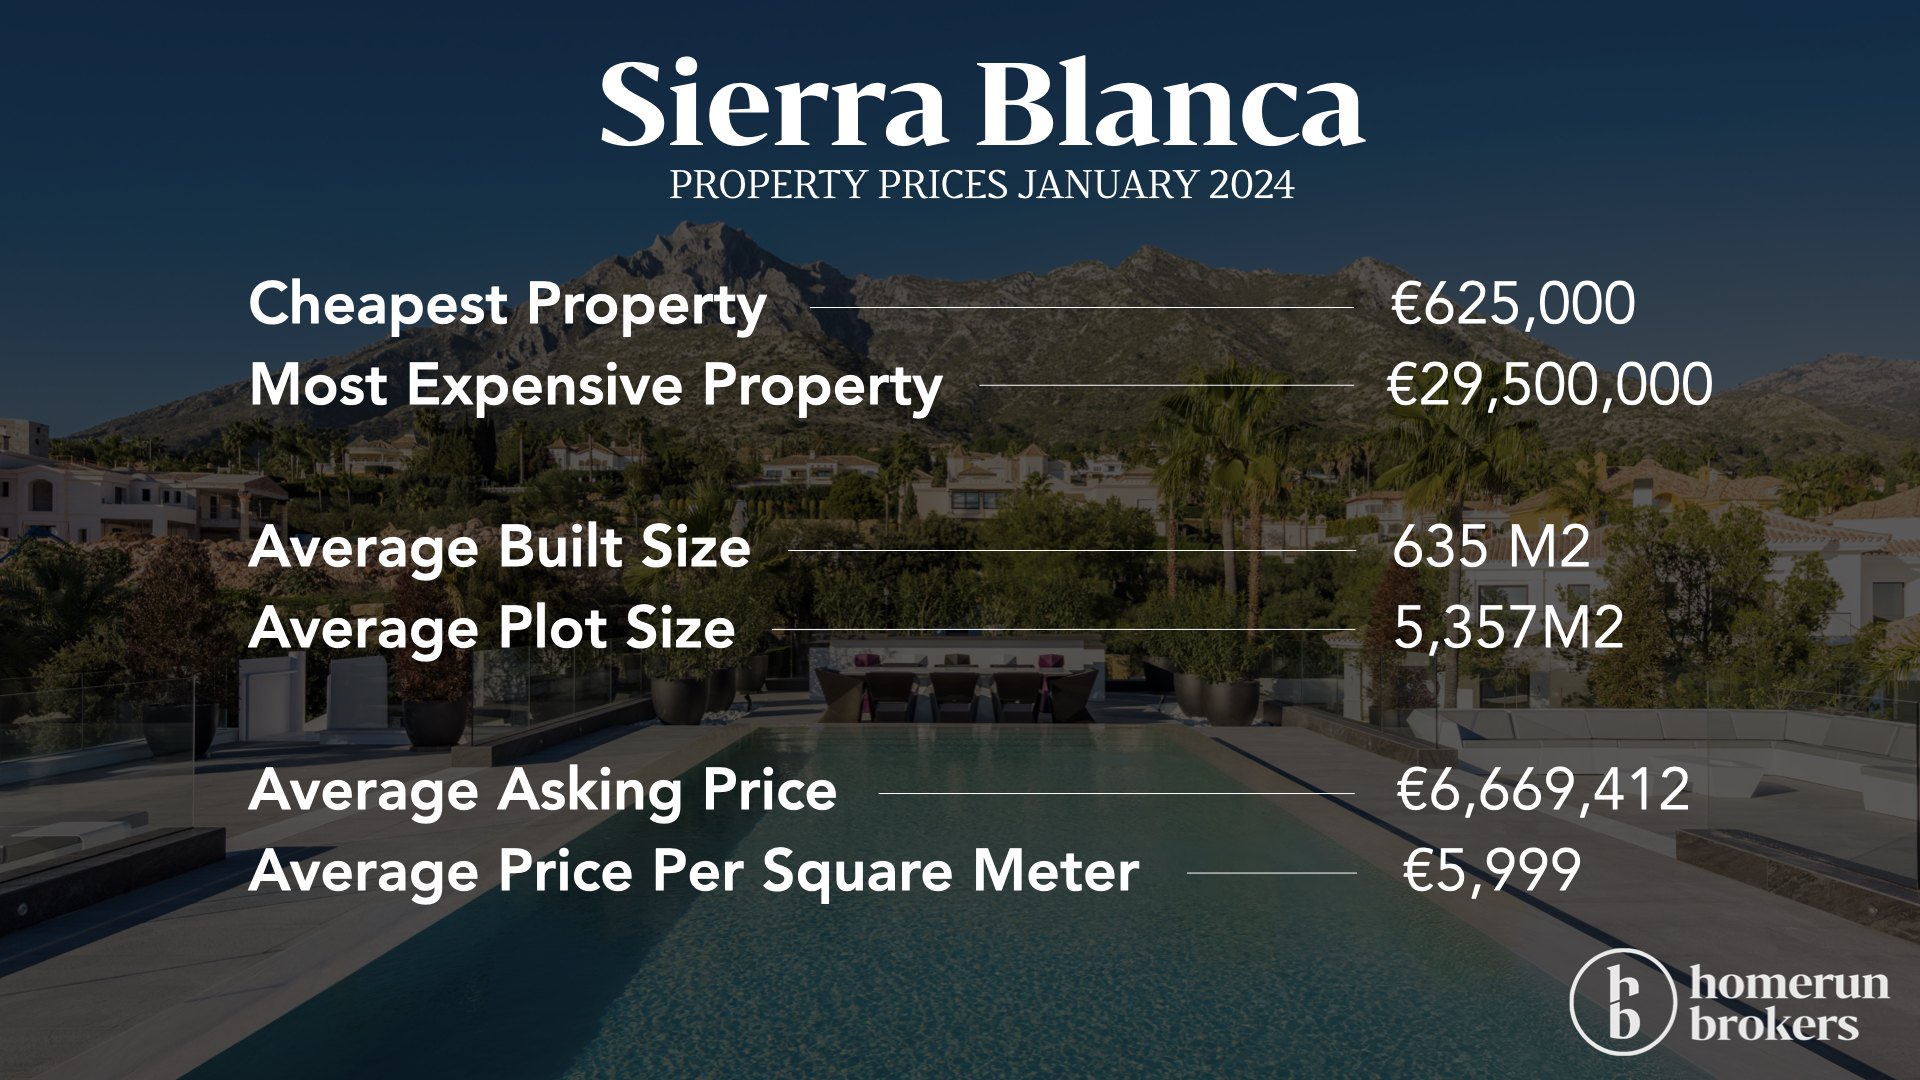 Sierra Blanca property prices 2024